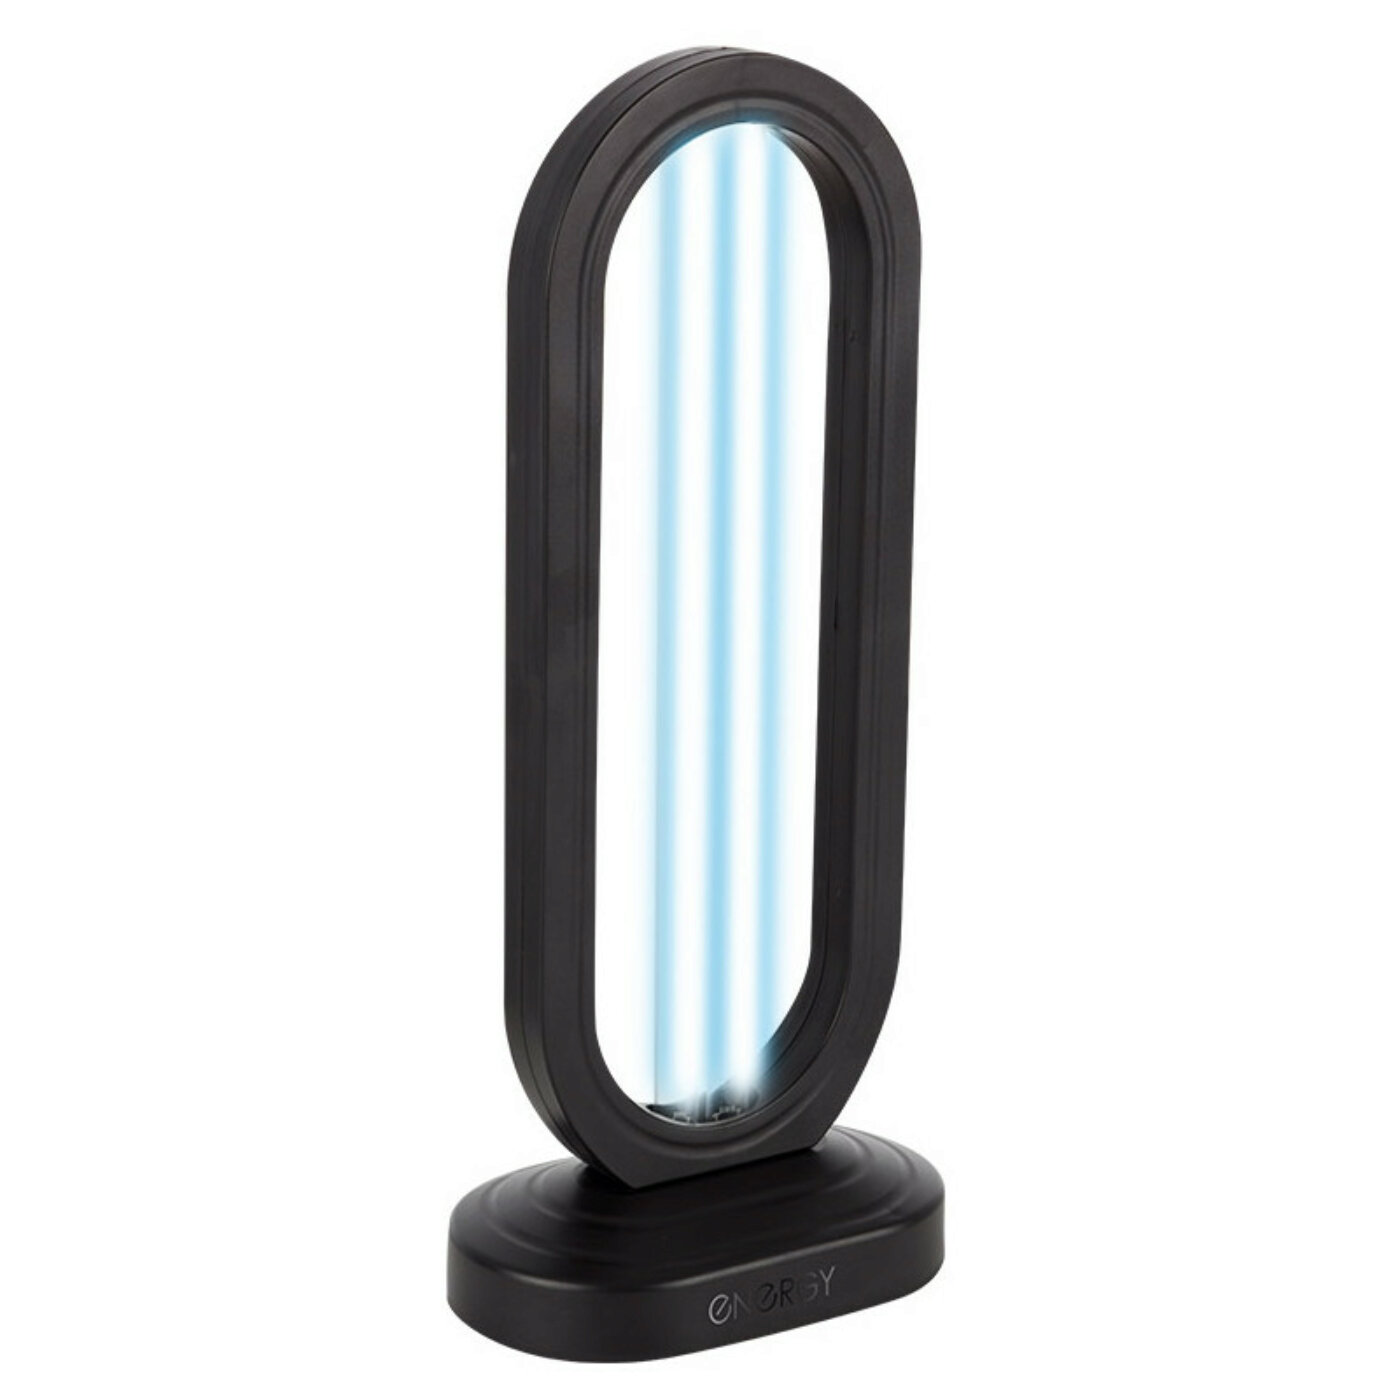 Купить Лампа настольная ультрафиолетовая Energy UF-0702